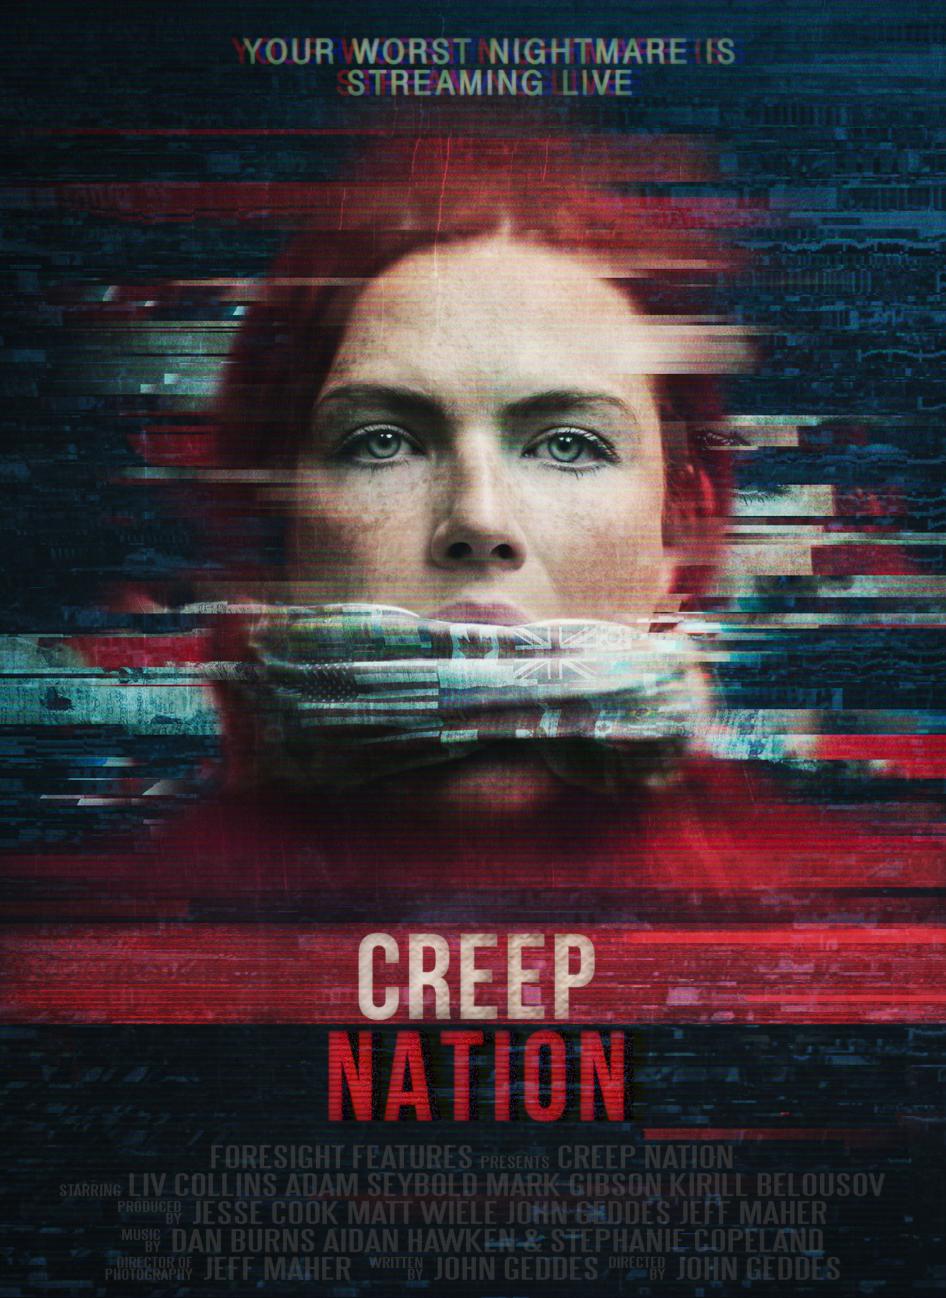 Nonton film Creep Nation layarkaca21 indoxx1 ganool online streaming terbaru